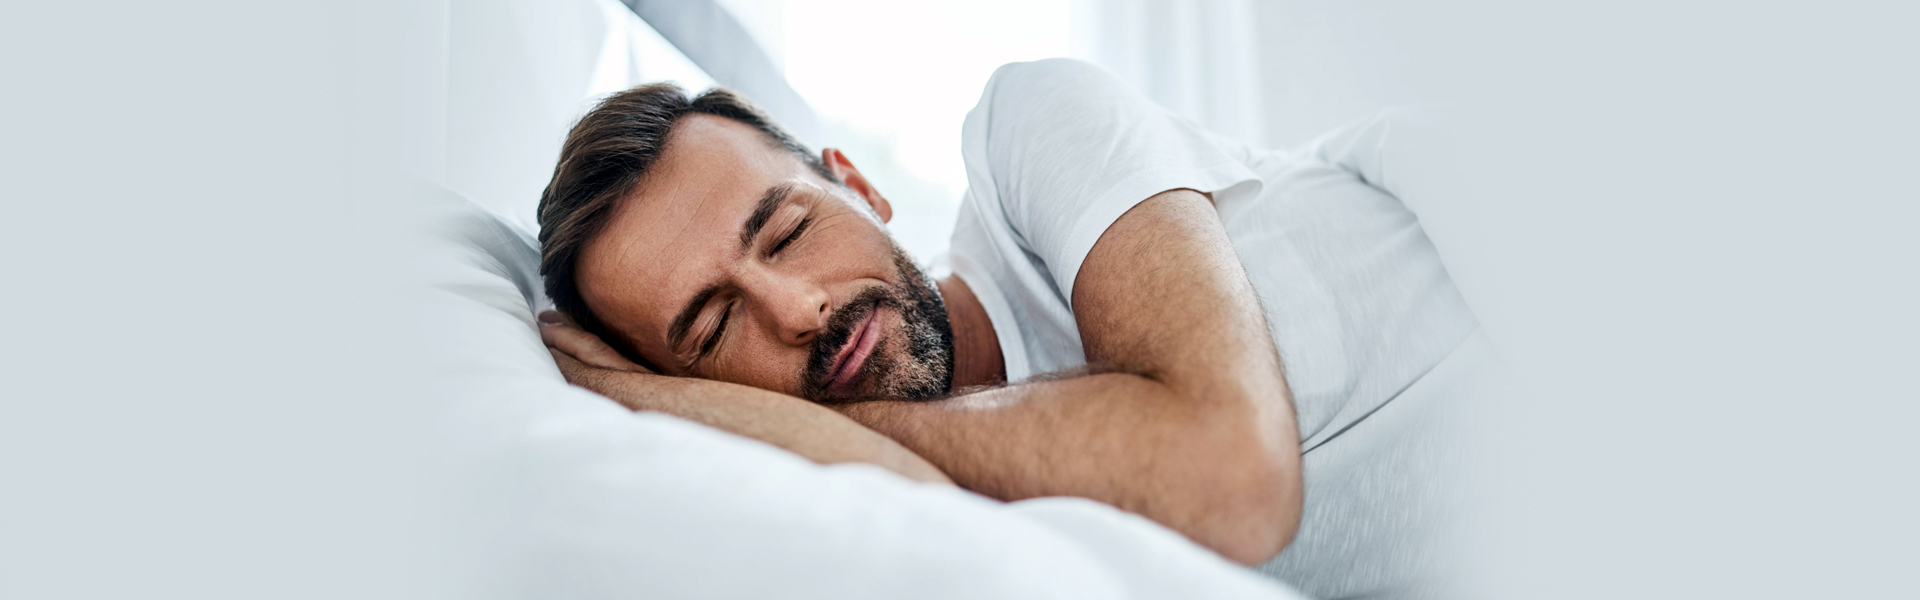 Sleep Apnea: What It Is, Diagnosis, and Treatment